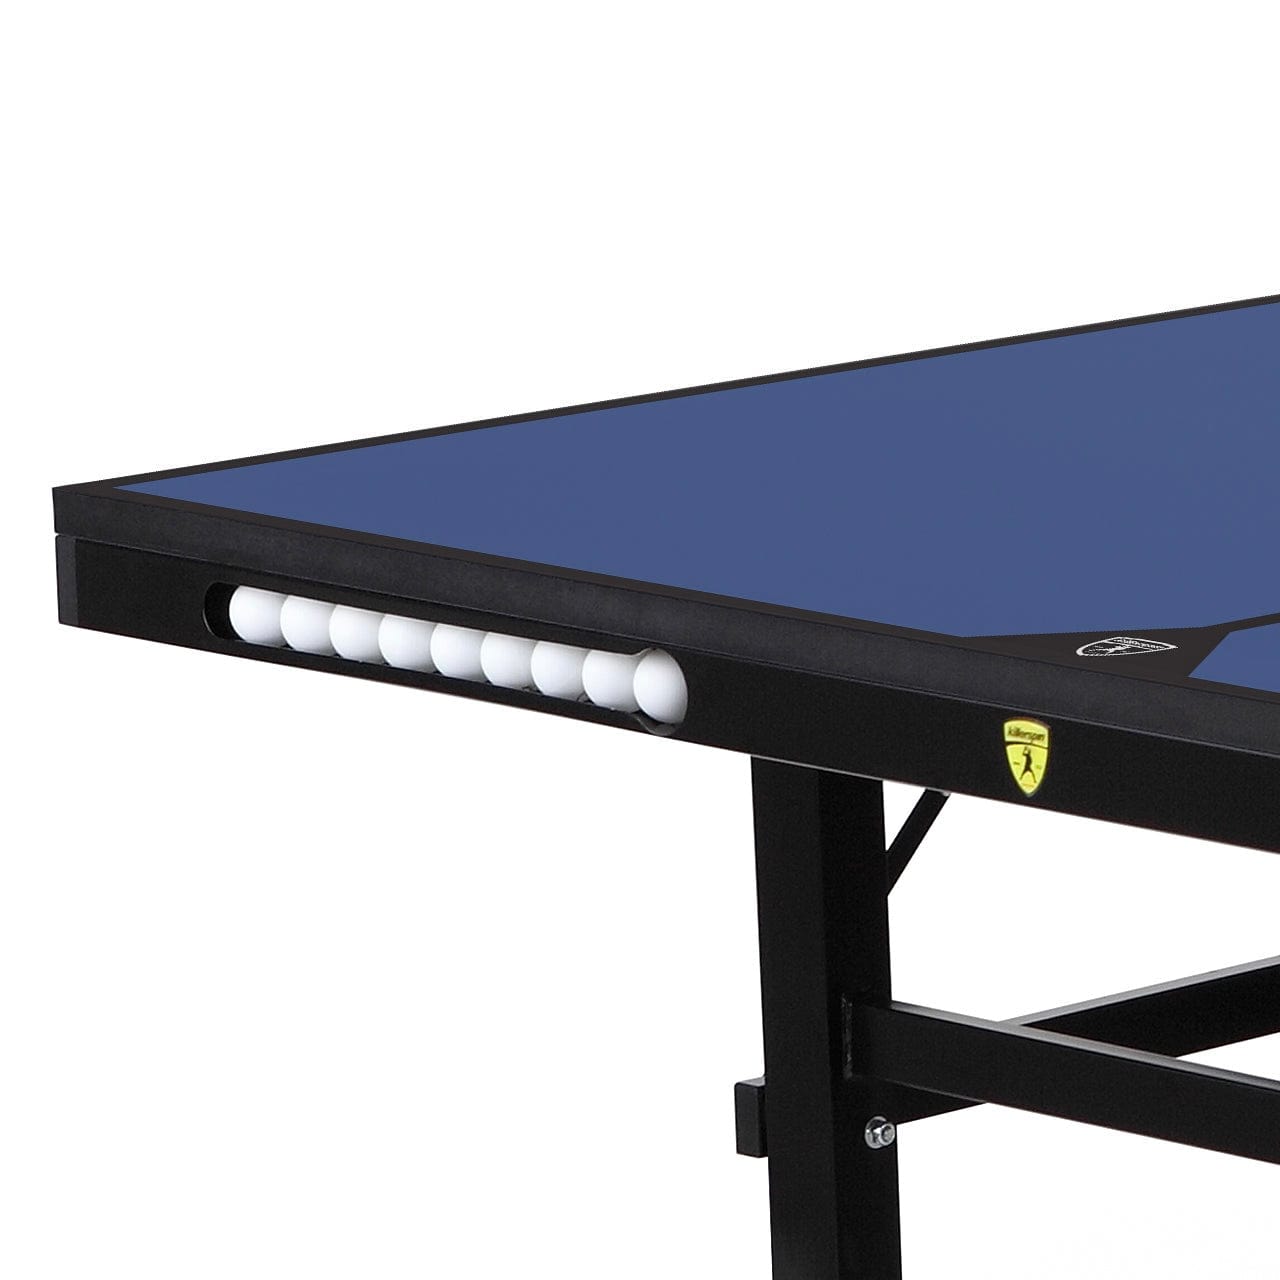 Killerspin MyT 415 Max Deep Blu Foldable Indoor Ping Pong Table